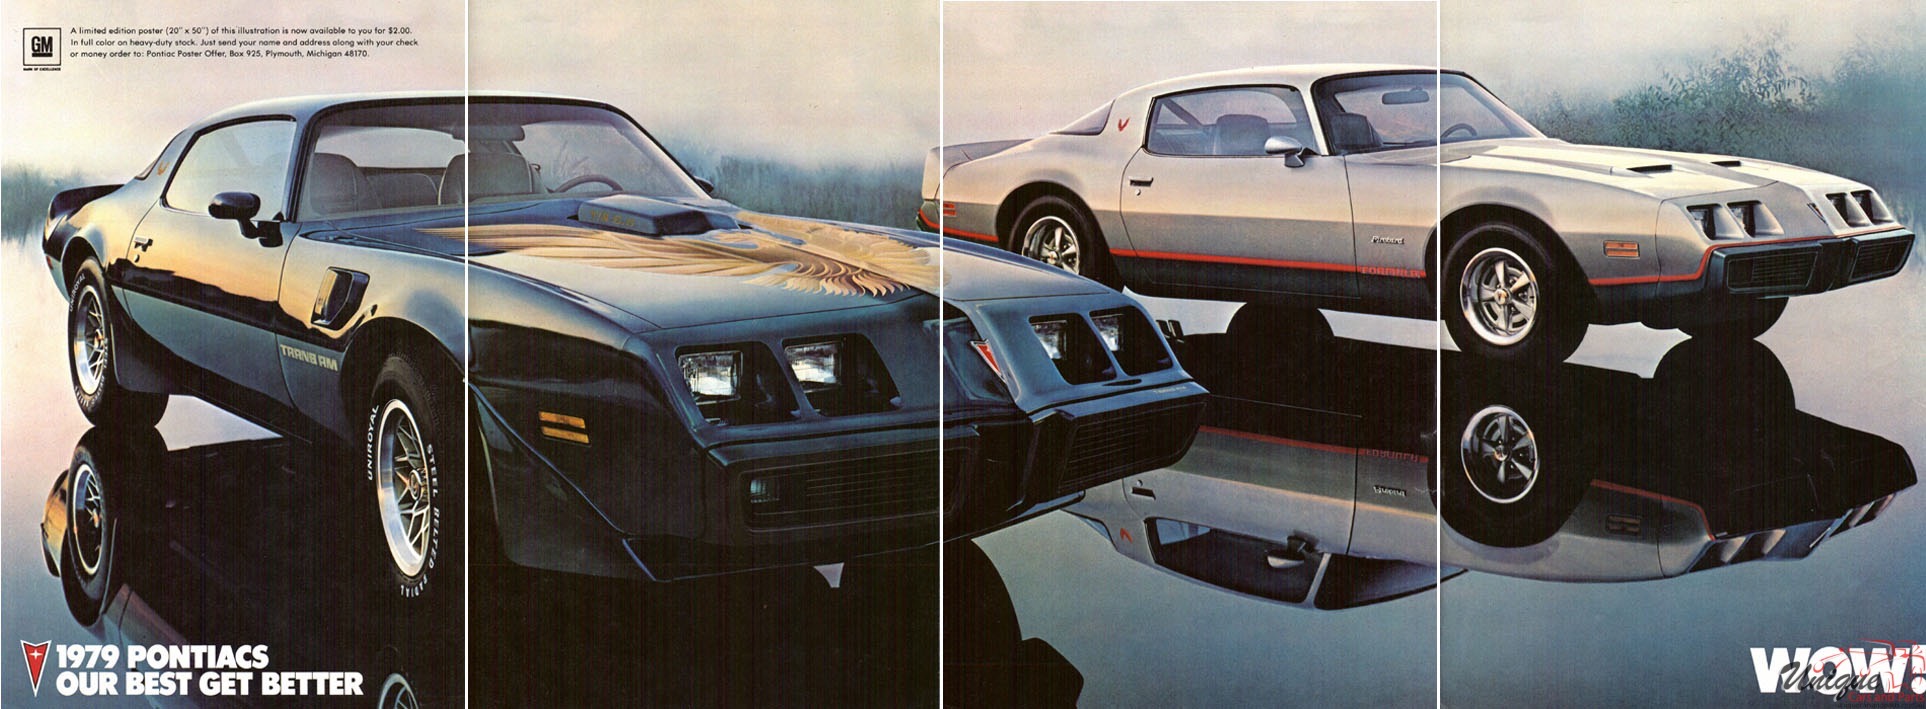 1979 Pontiac Firebird Brochure Page 3